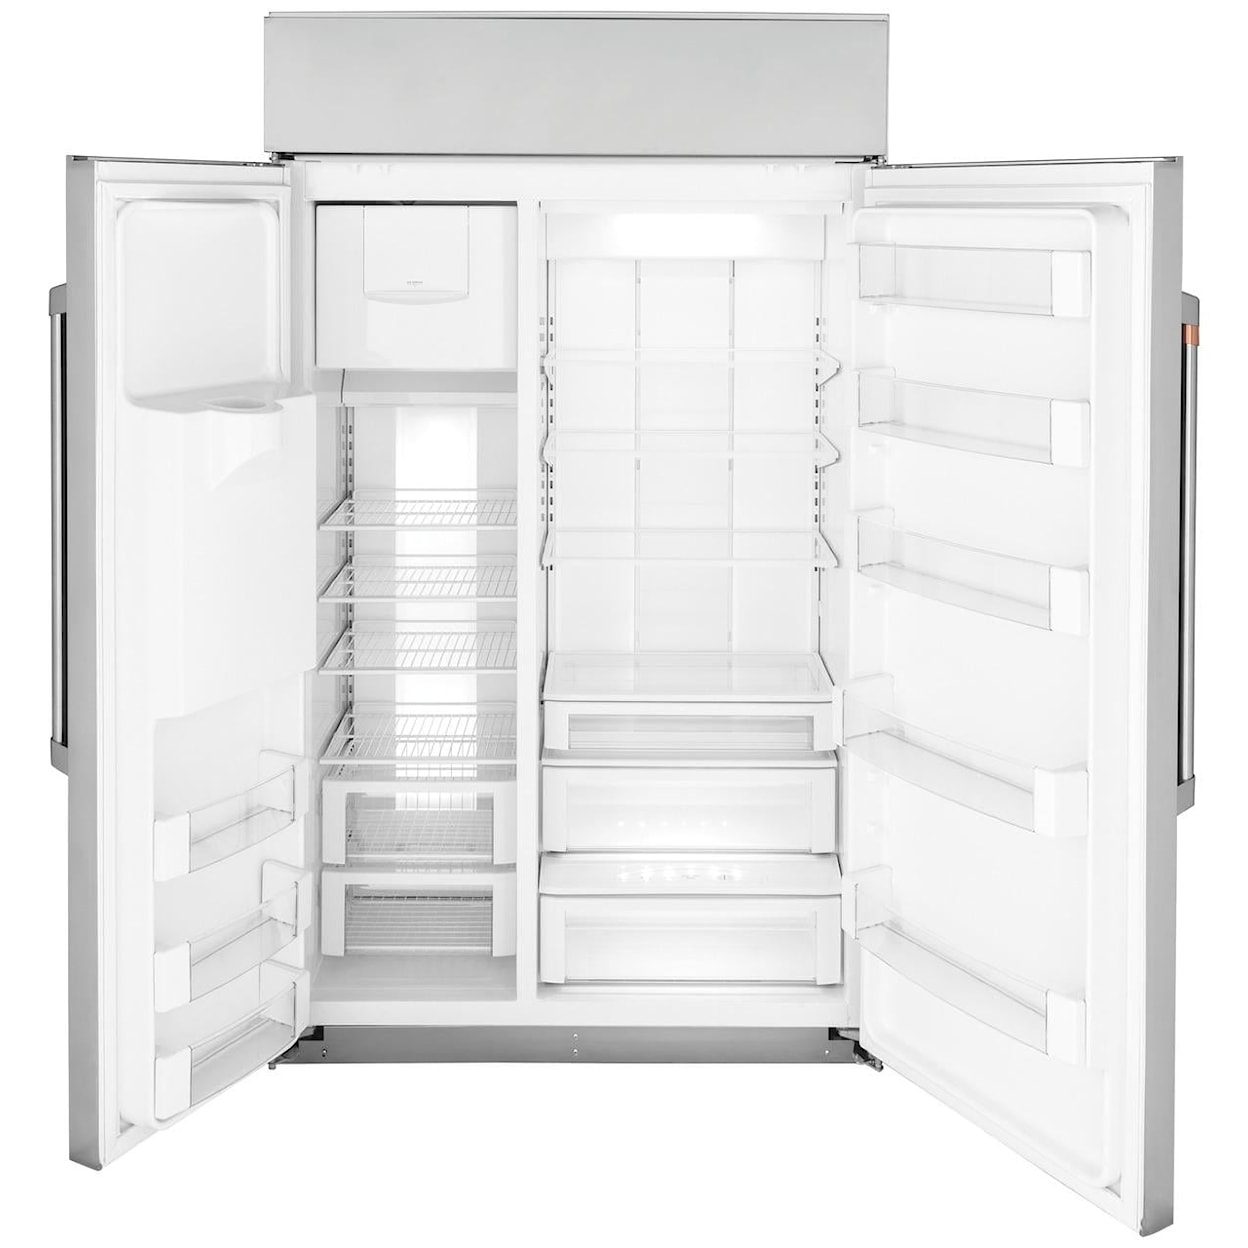 Café Refrigerators Side By Side Built In Refrigerator